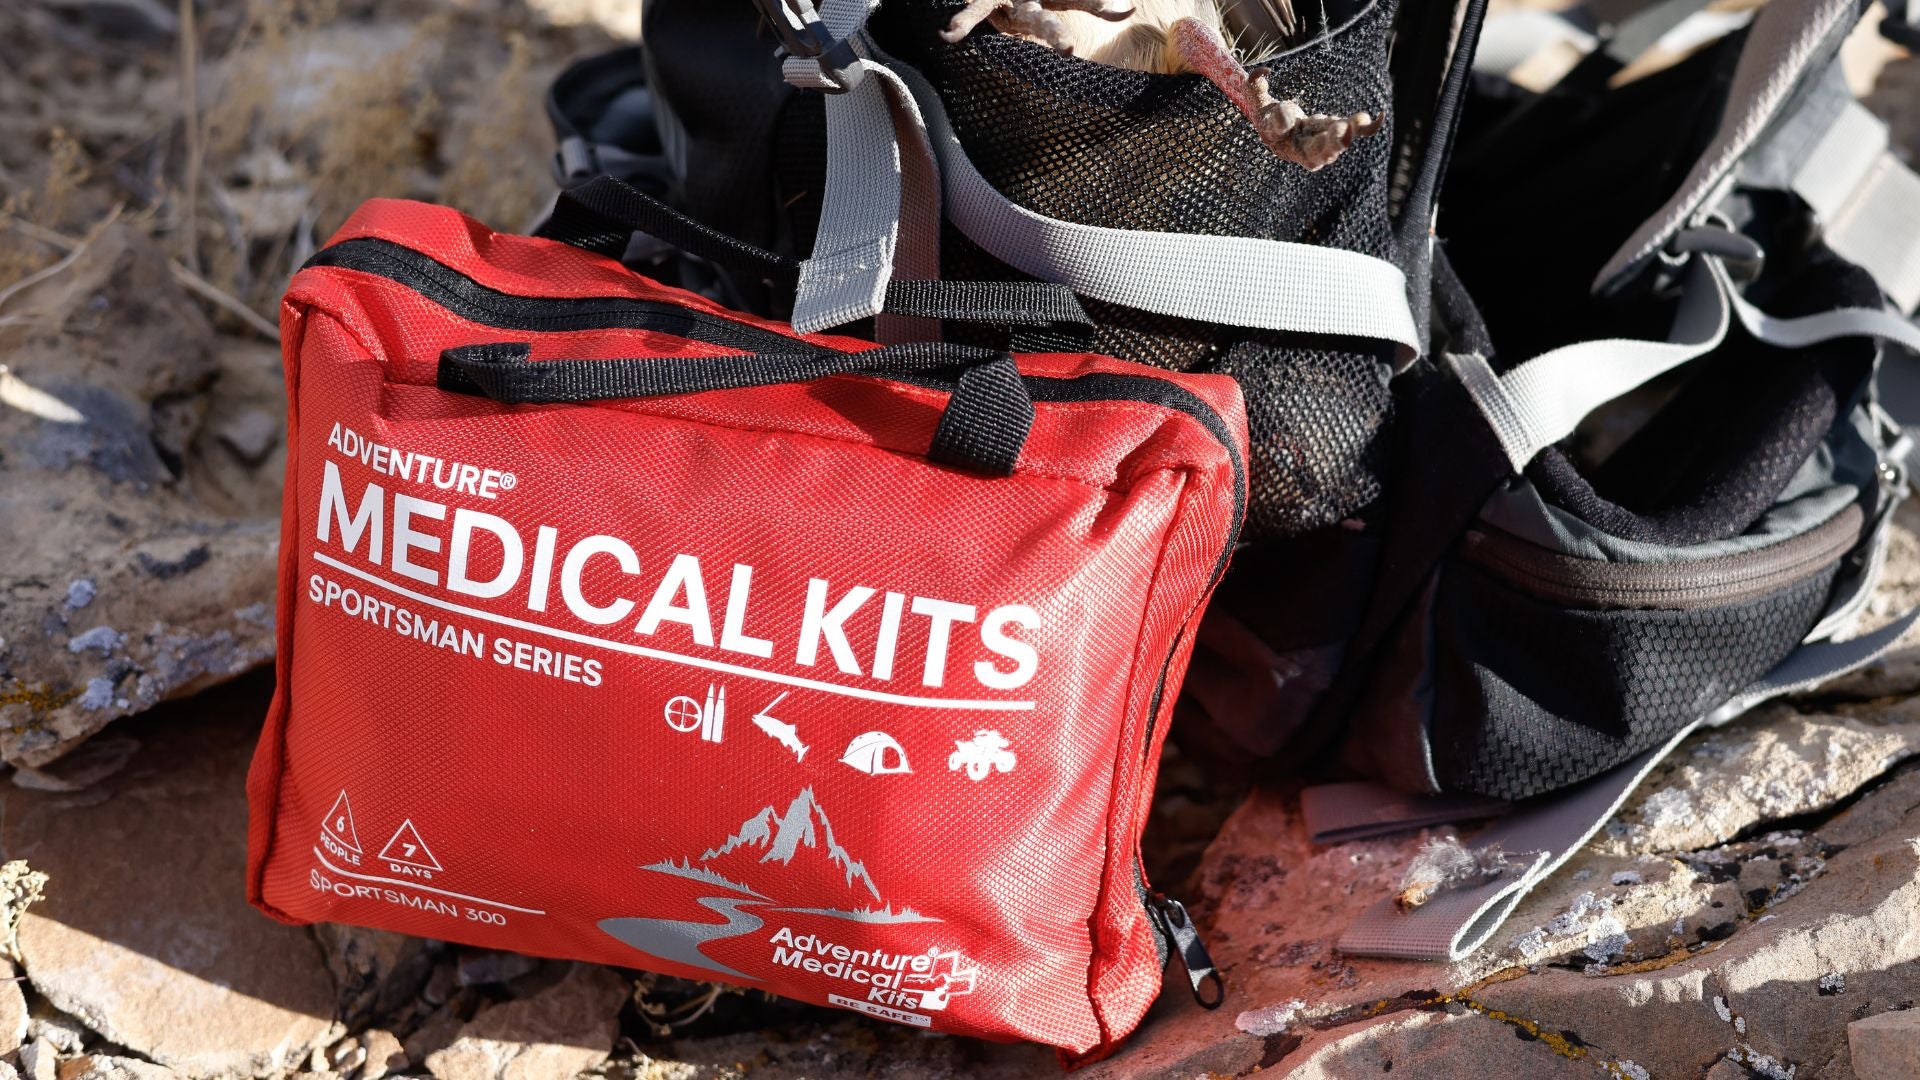 Sportsman Series Medical Kit on ground